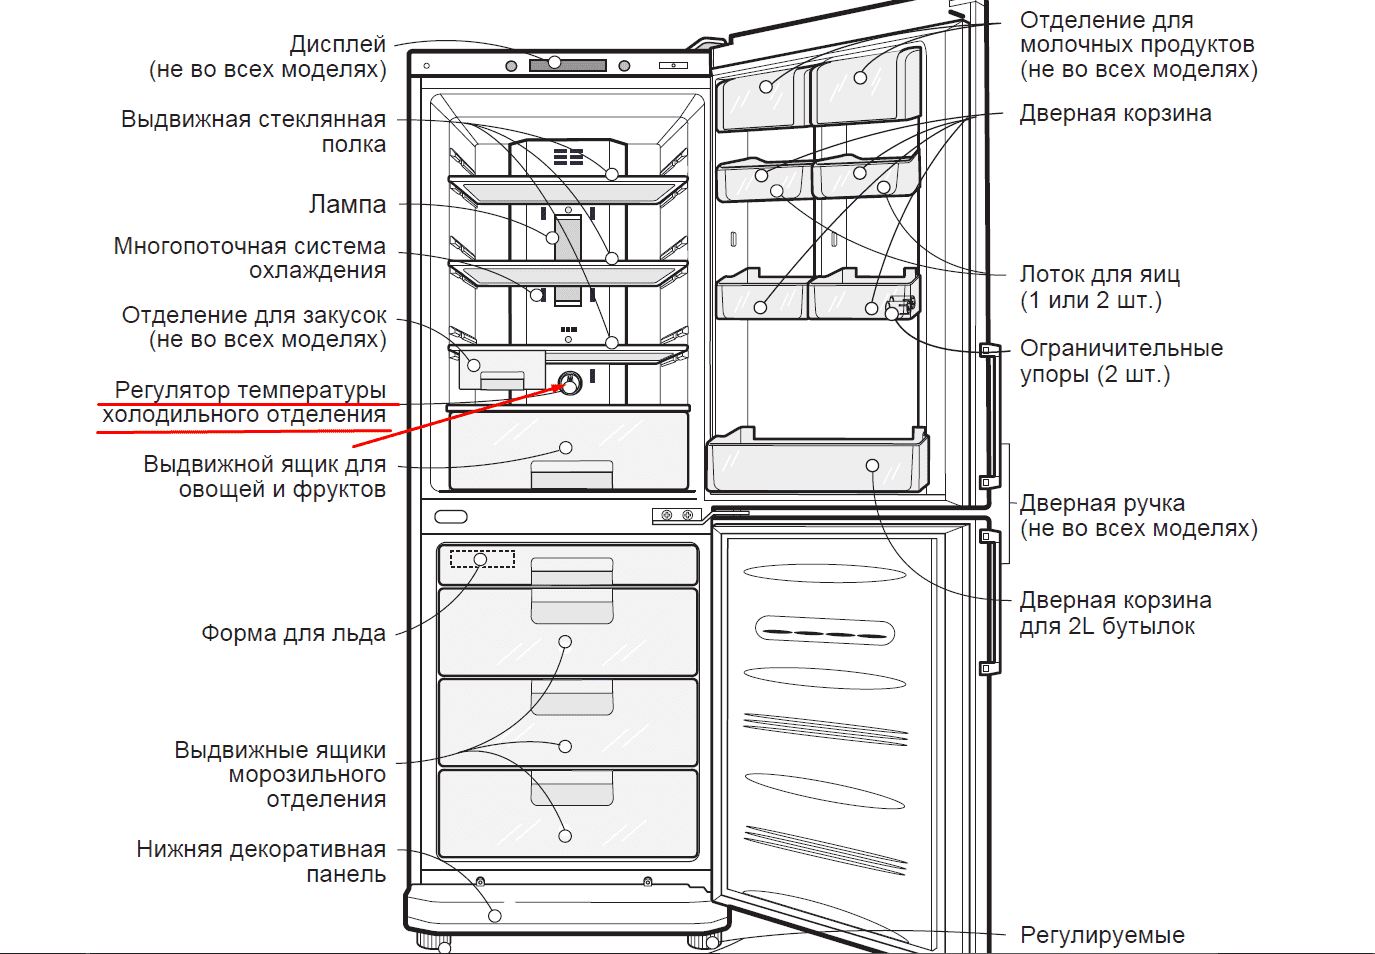 Ремонт холодильника своими руками: диагностика поломок, no frost, неисправности